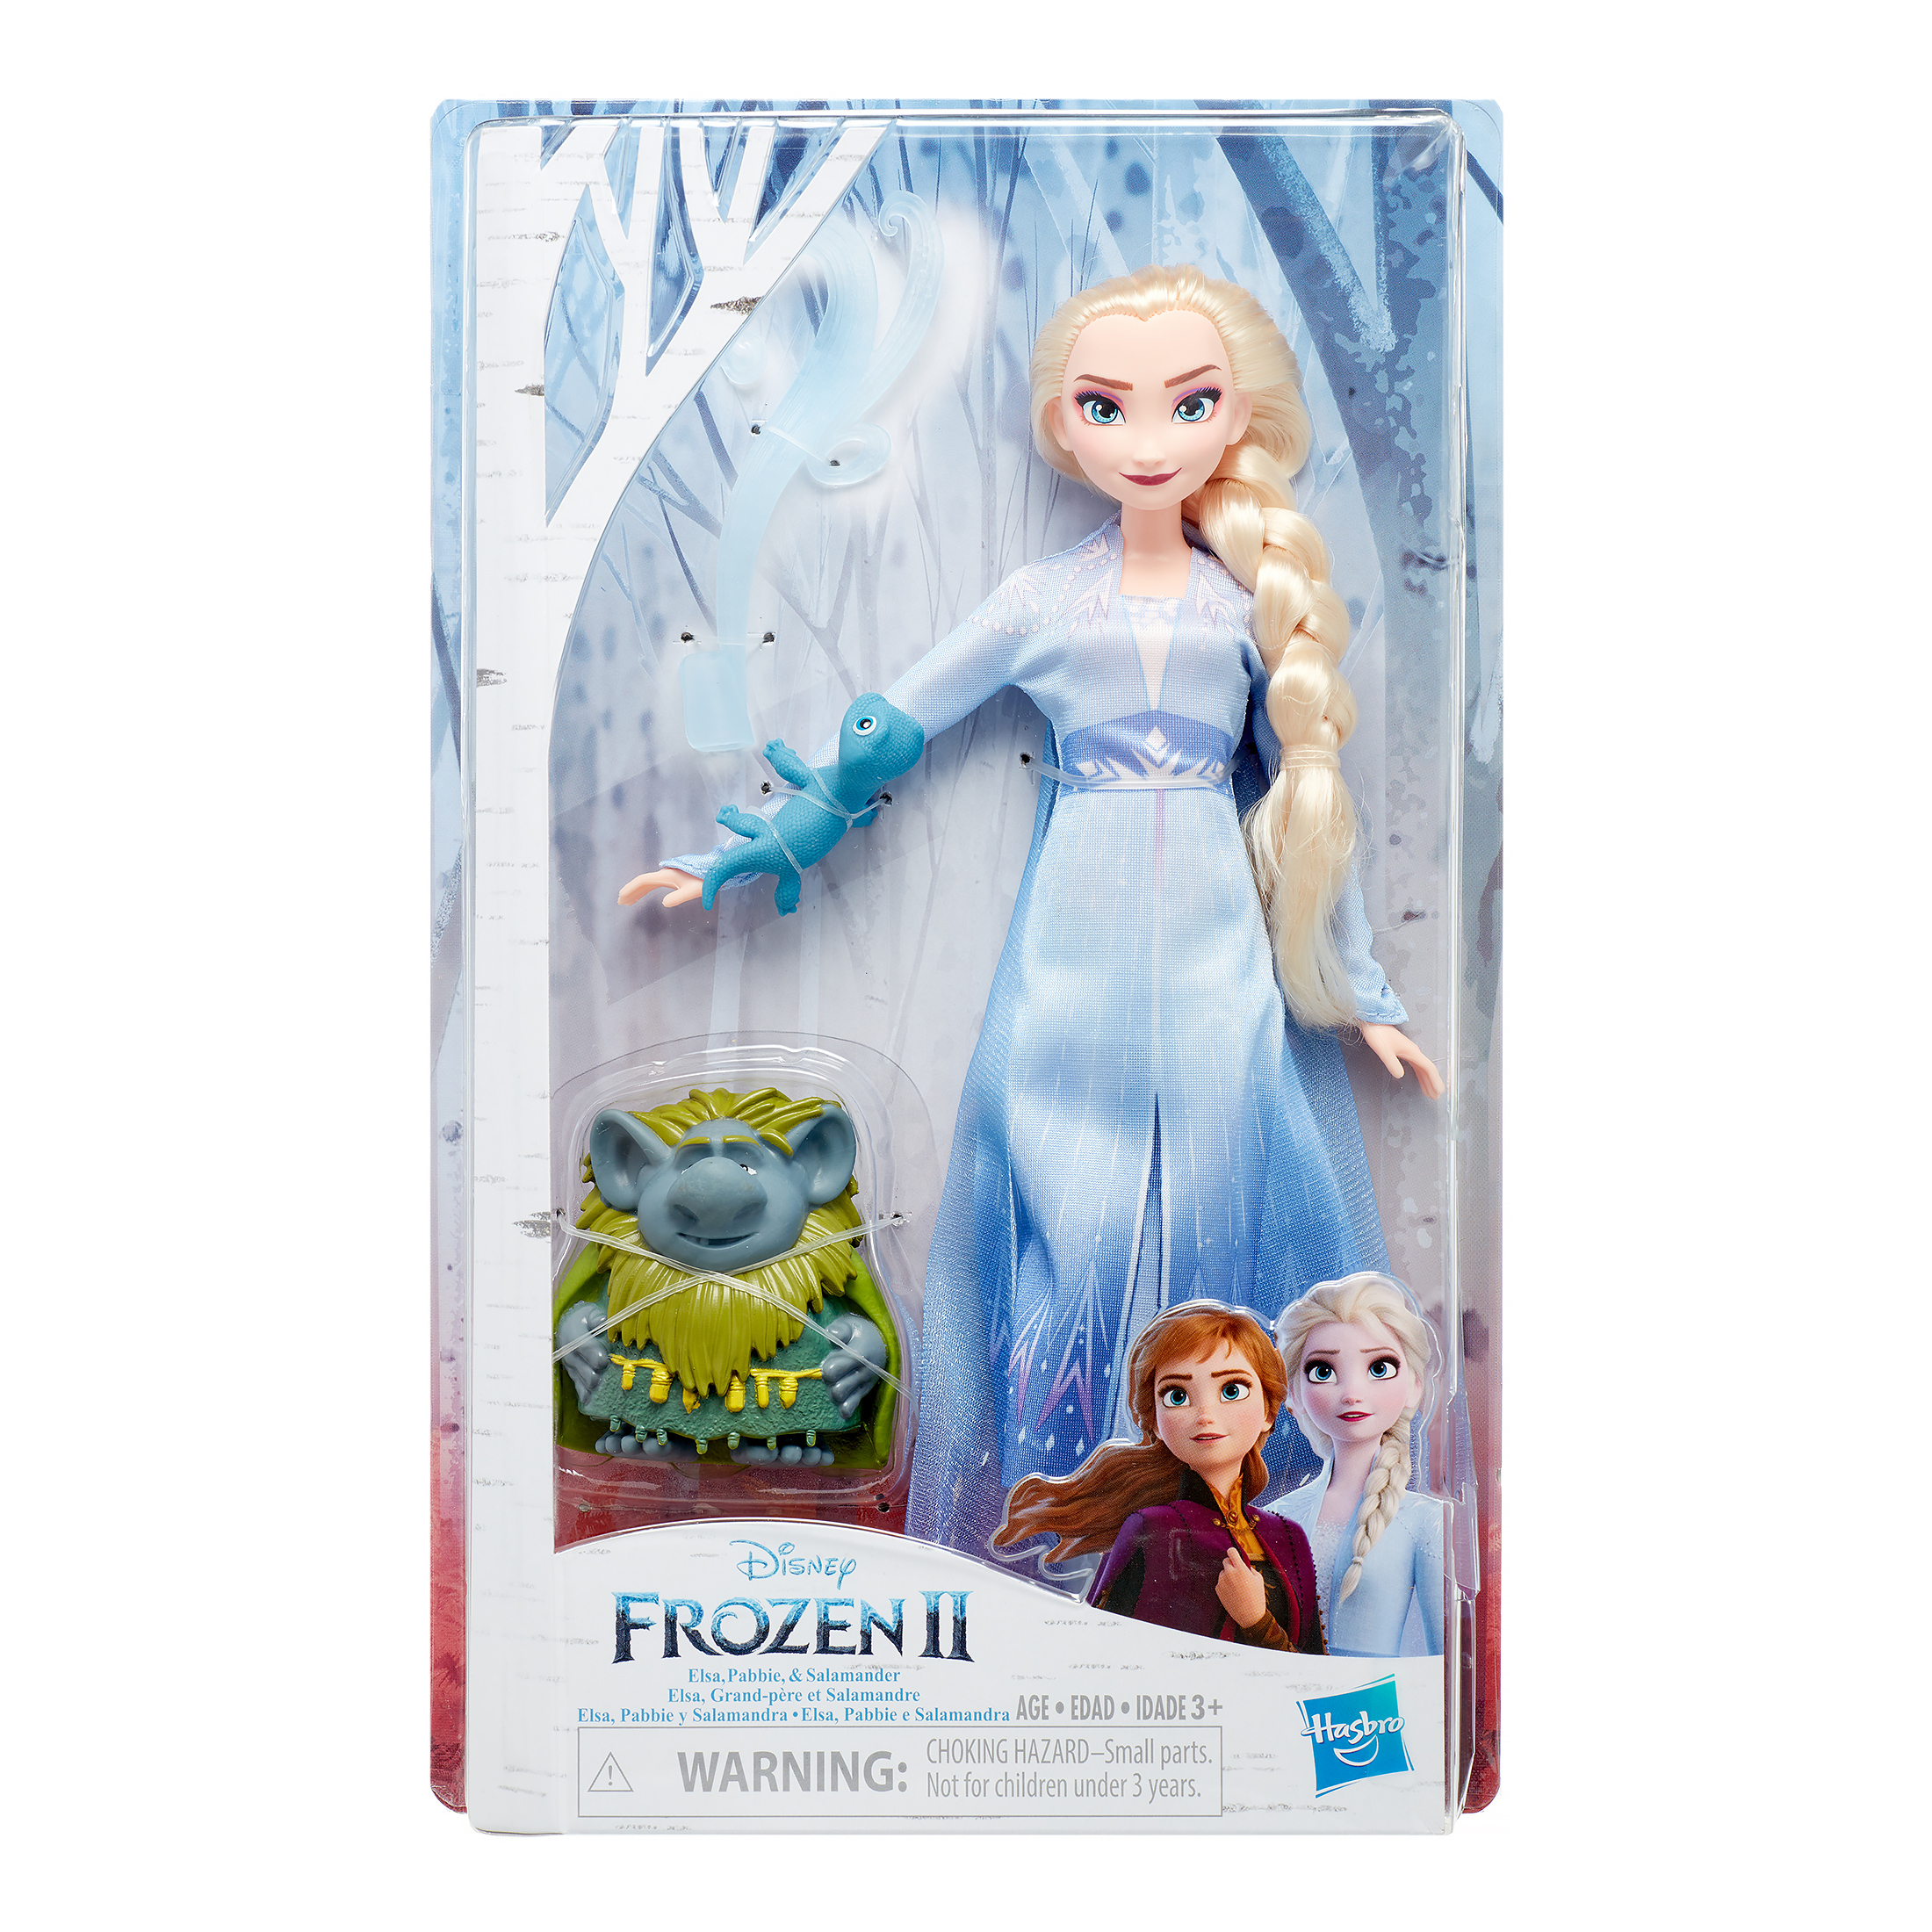 Disney Frozen 2 Elsa Fashion Pabbie and Salamander Doll Playset, Inspiredby Frozen 2 - image 2 of 6